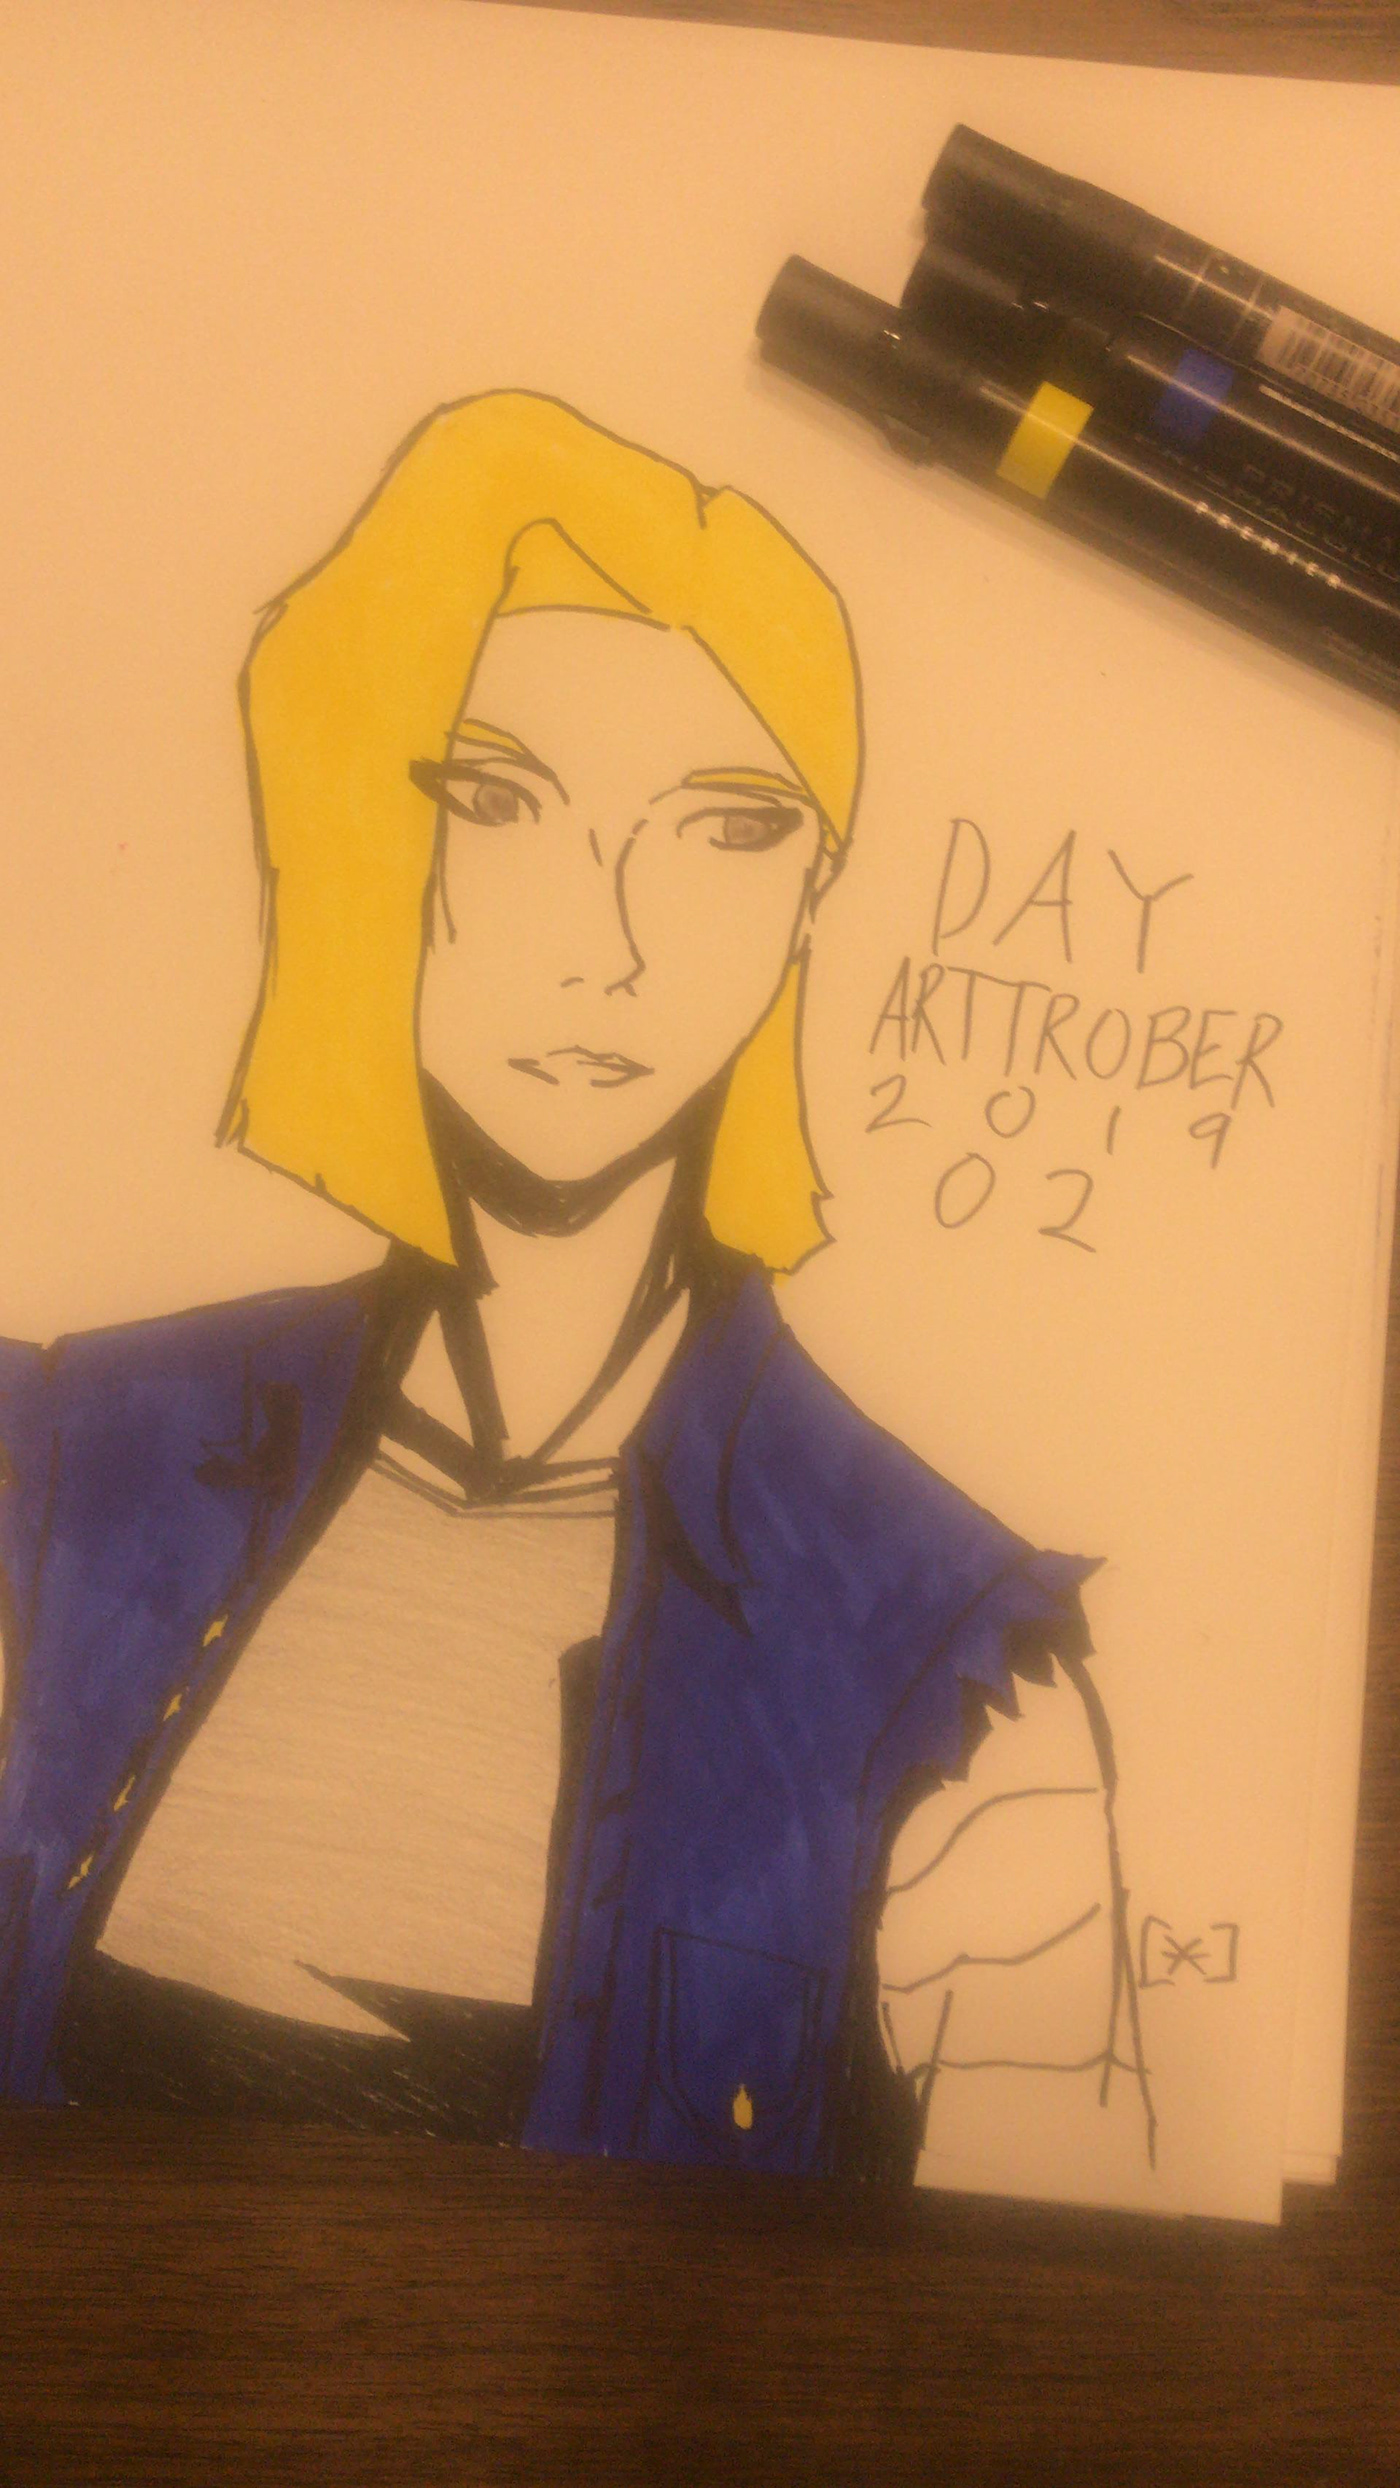 Arttrober2019 Arttrober day02 android18